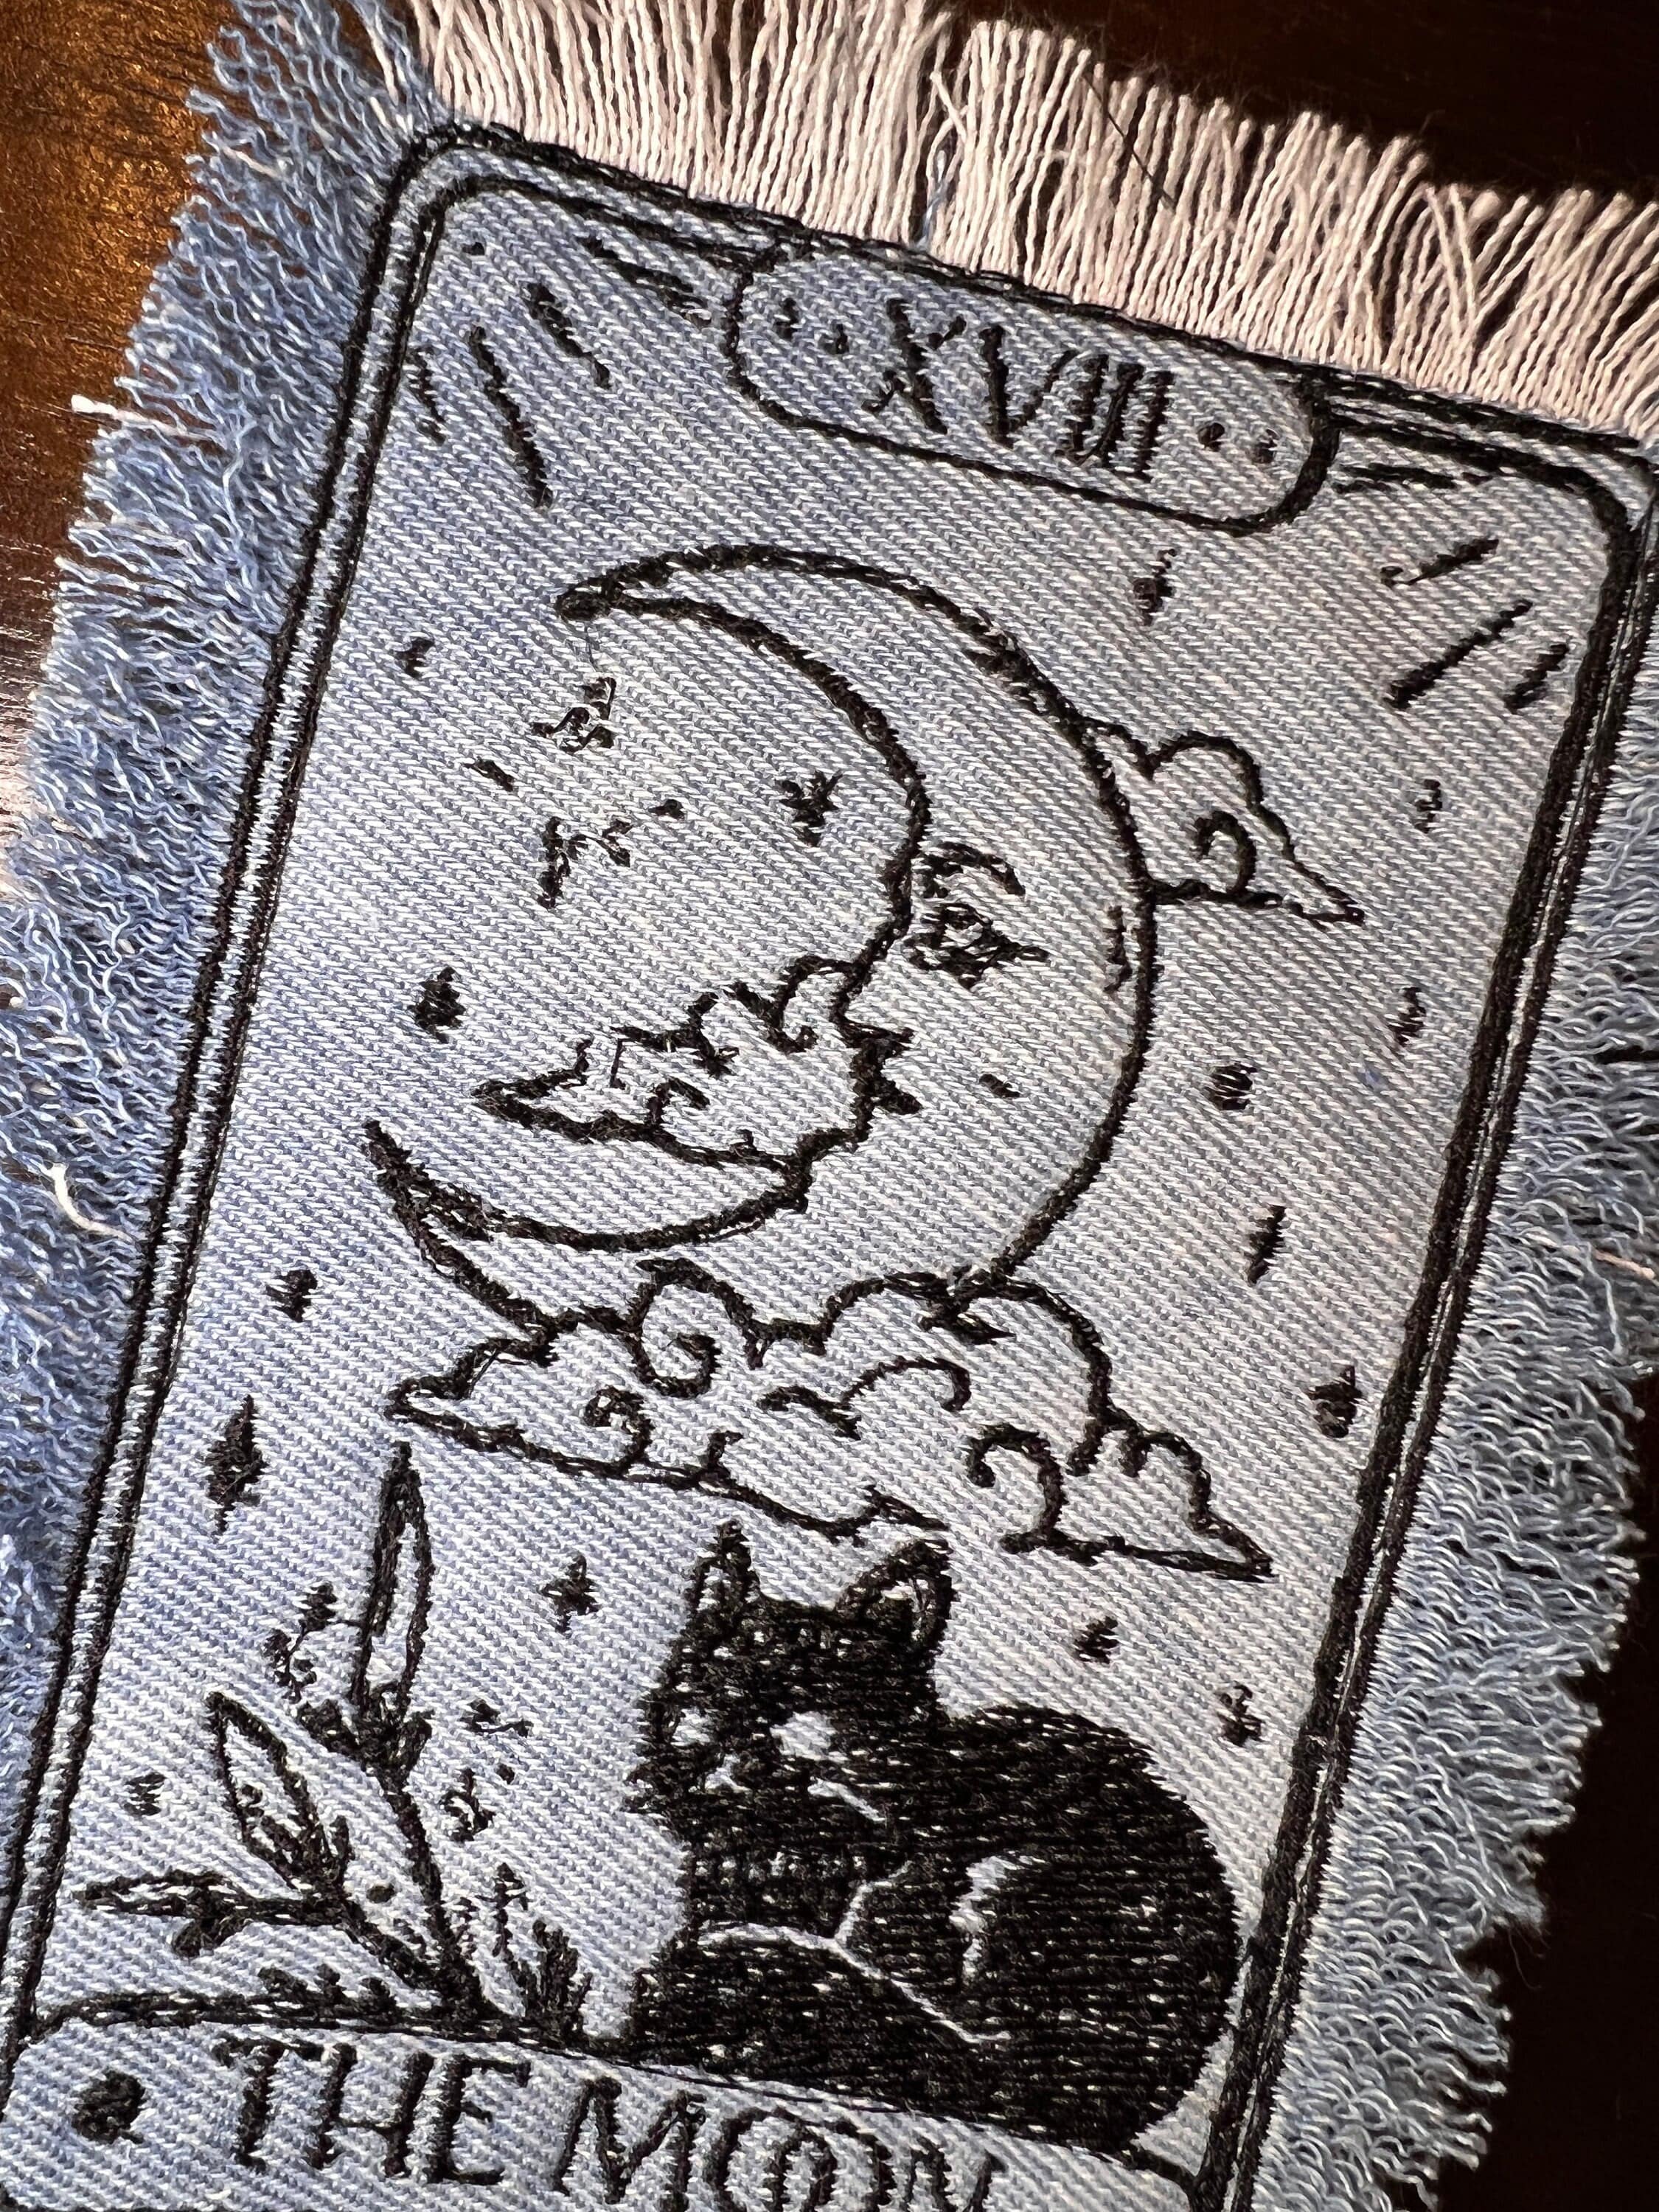 The MOON Tarot SOULE PATCH art bleached Iron On denim patch 6 X 4 black embroidered Cat Tarot Decal Blue Jean Frayed edges handmade Tarot Cards